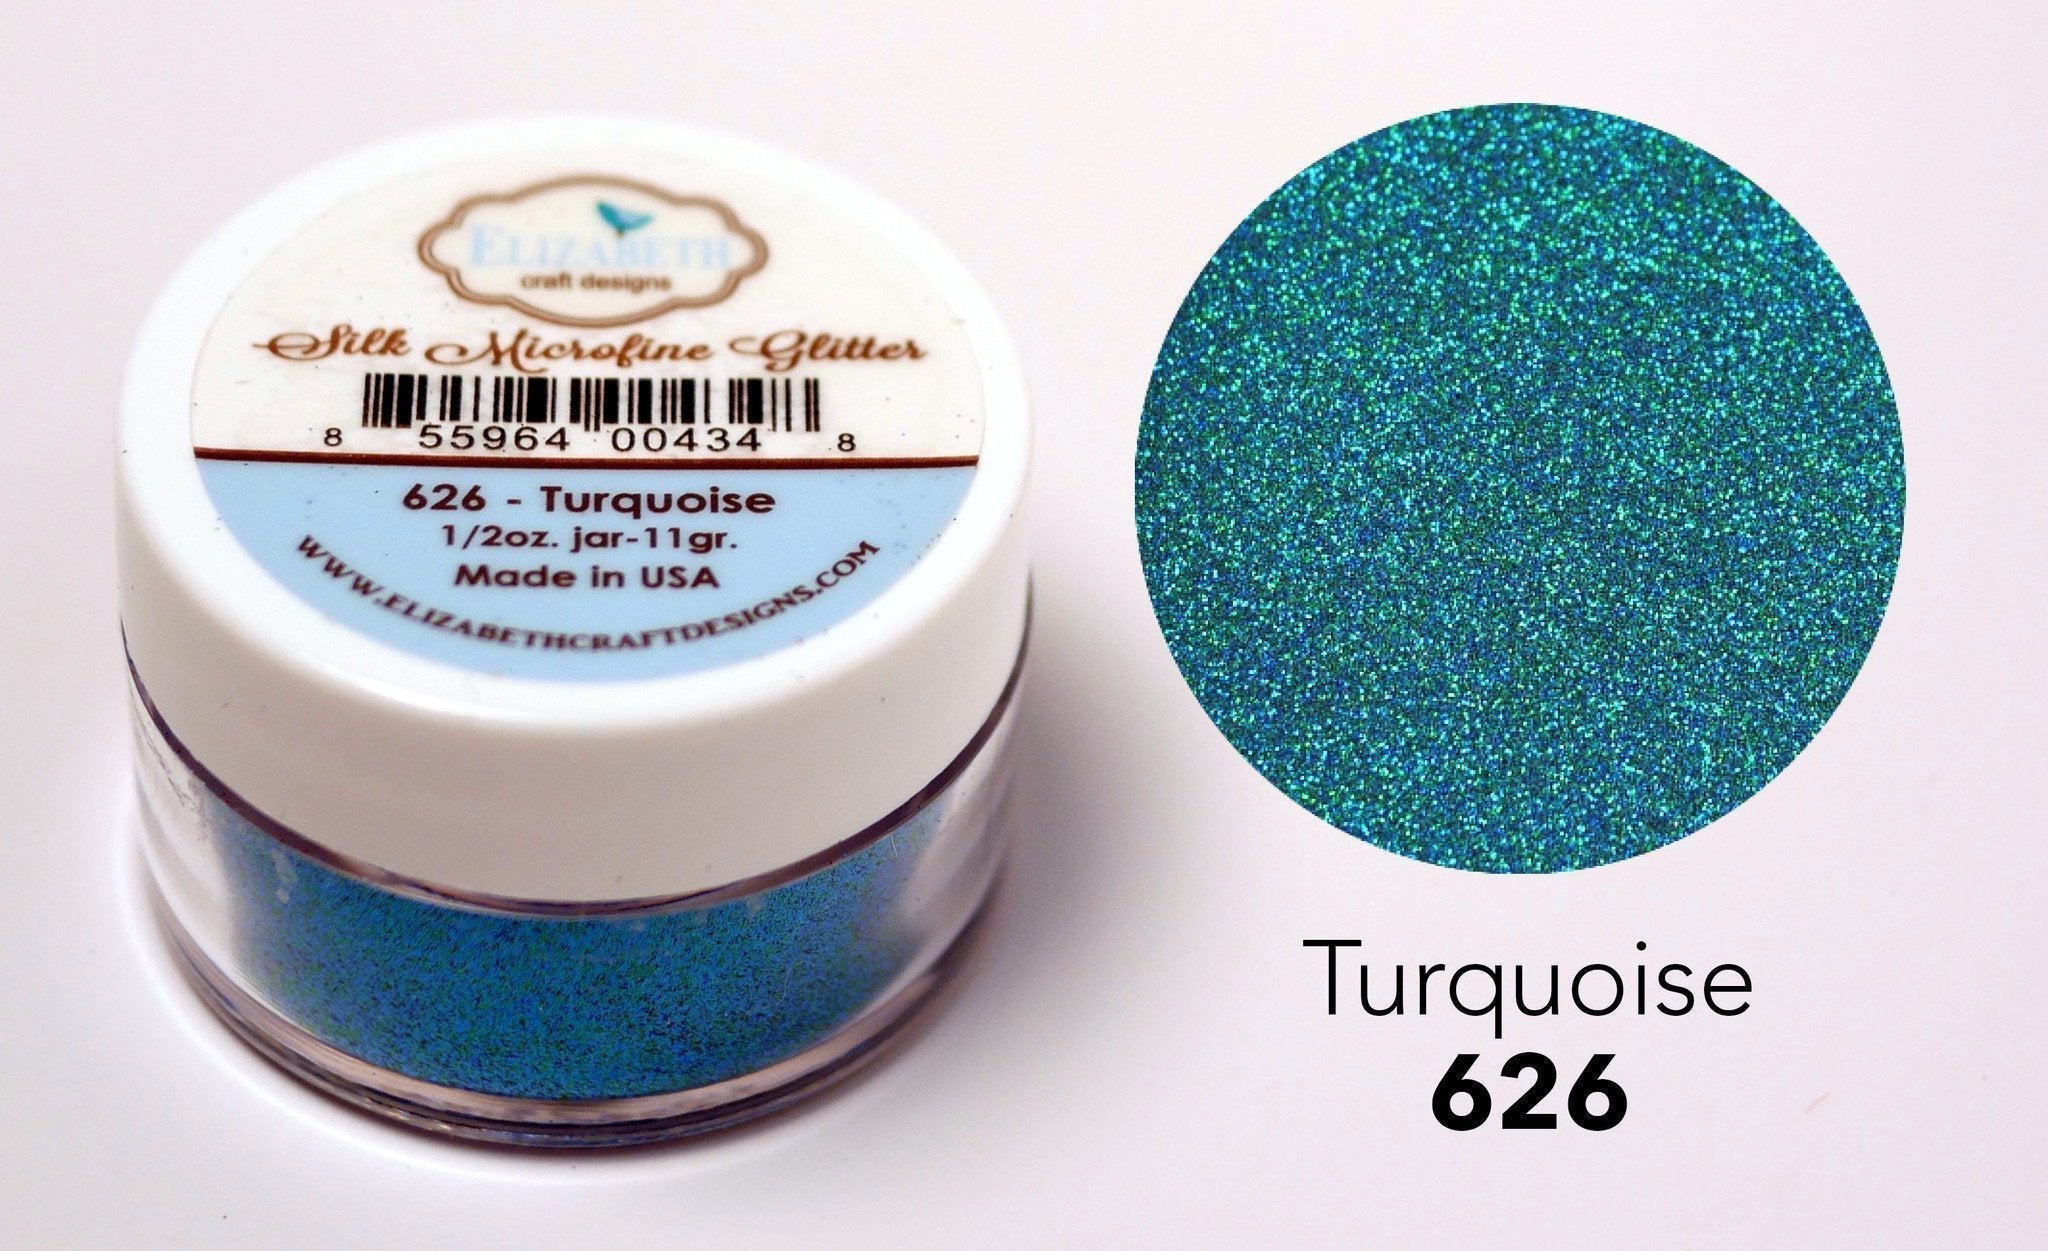 Turquoise - Silk Microfine Glitter